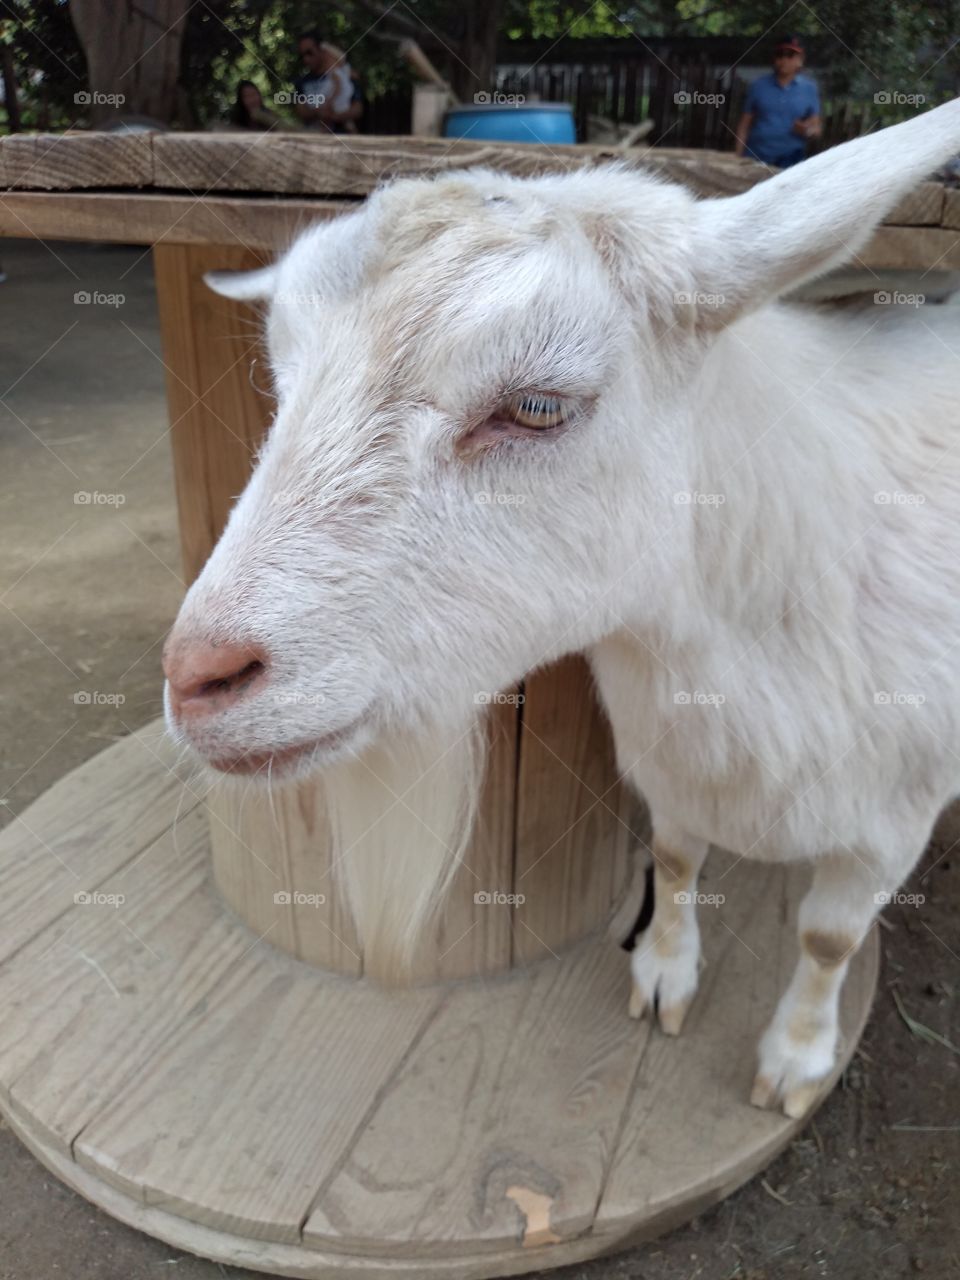 Billy goat gruff